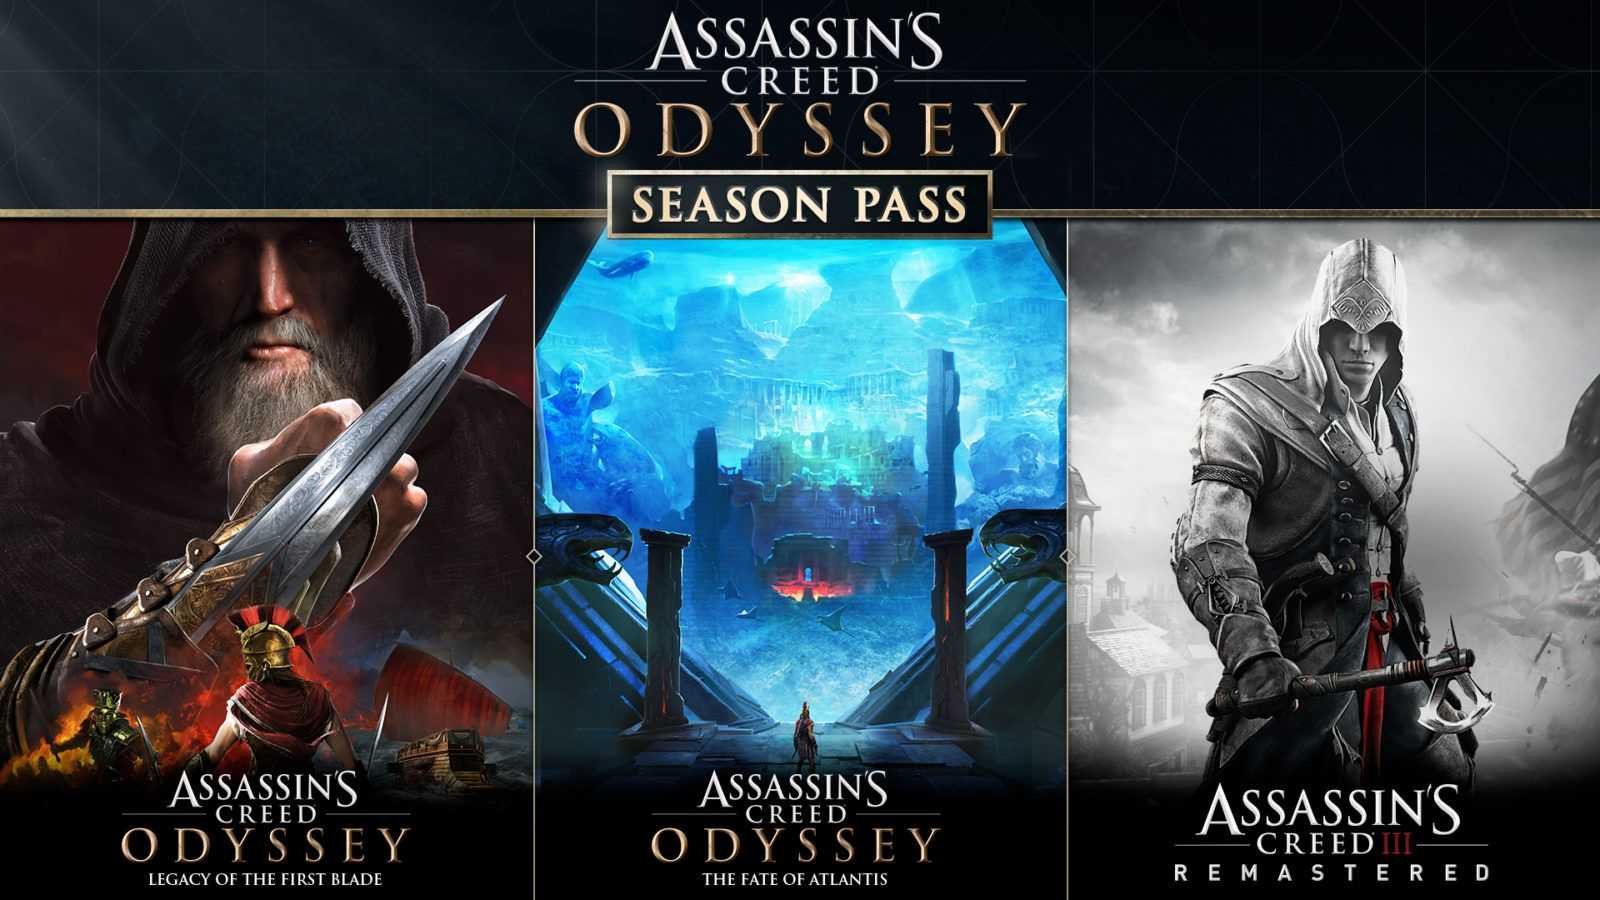 Assassins-Creed-Odyssey.jpg